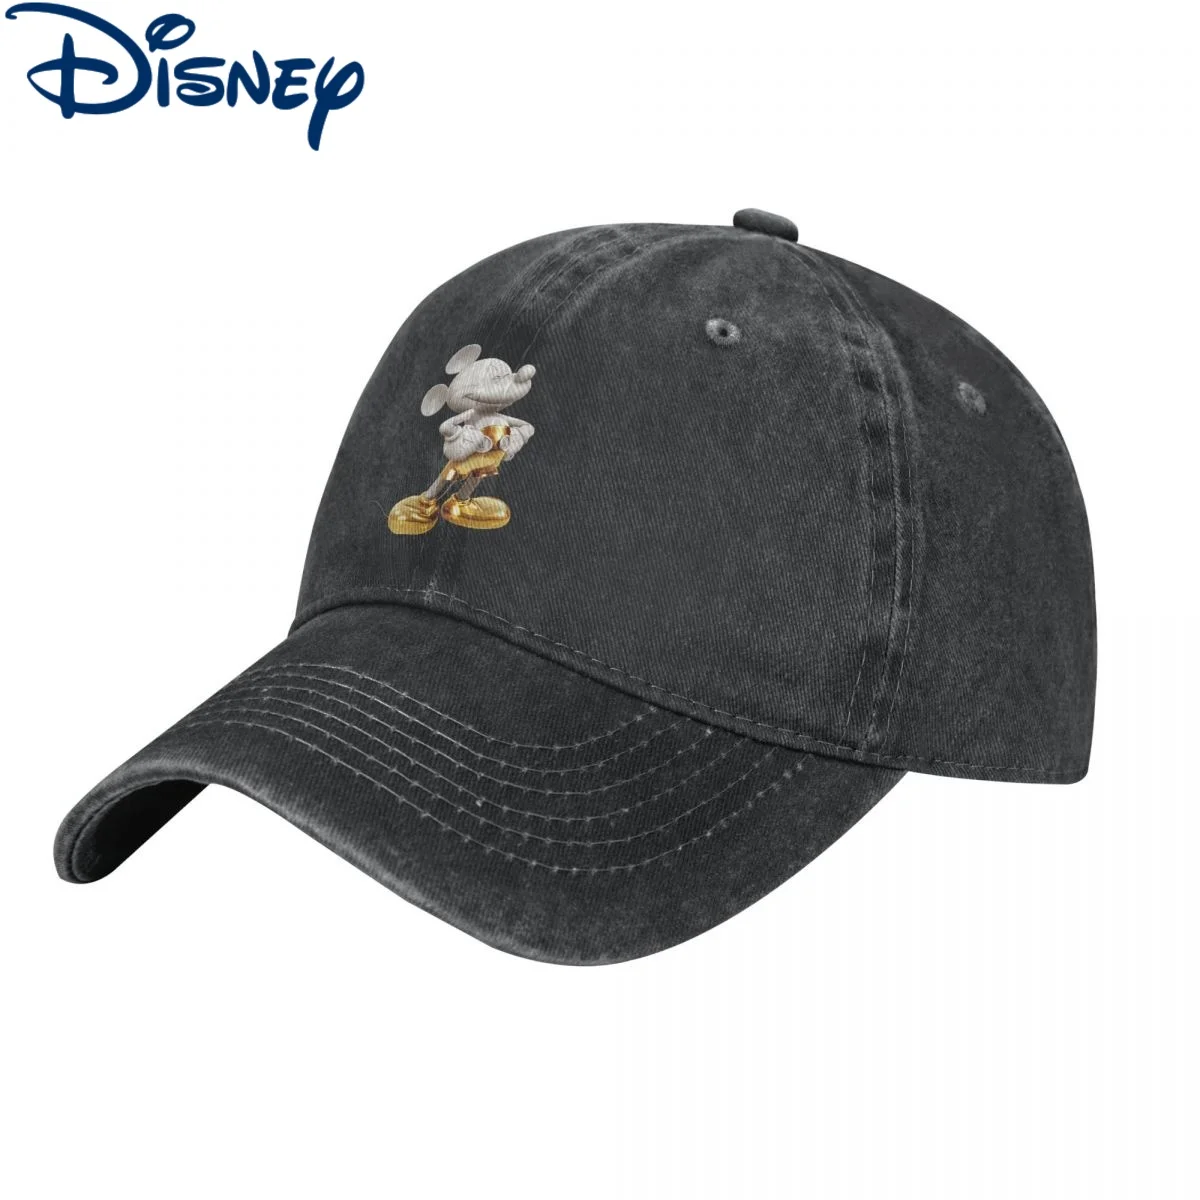 

Vintage Disney Gold Mickey Mouse Baseball Cap Men Women Distressed Washed Snapback Hat Outdoor Summer Adjustable Fit Hats Cap